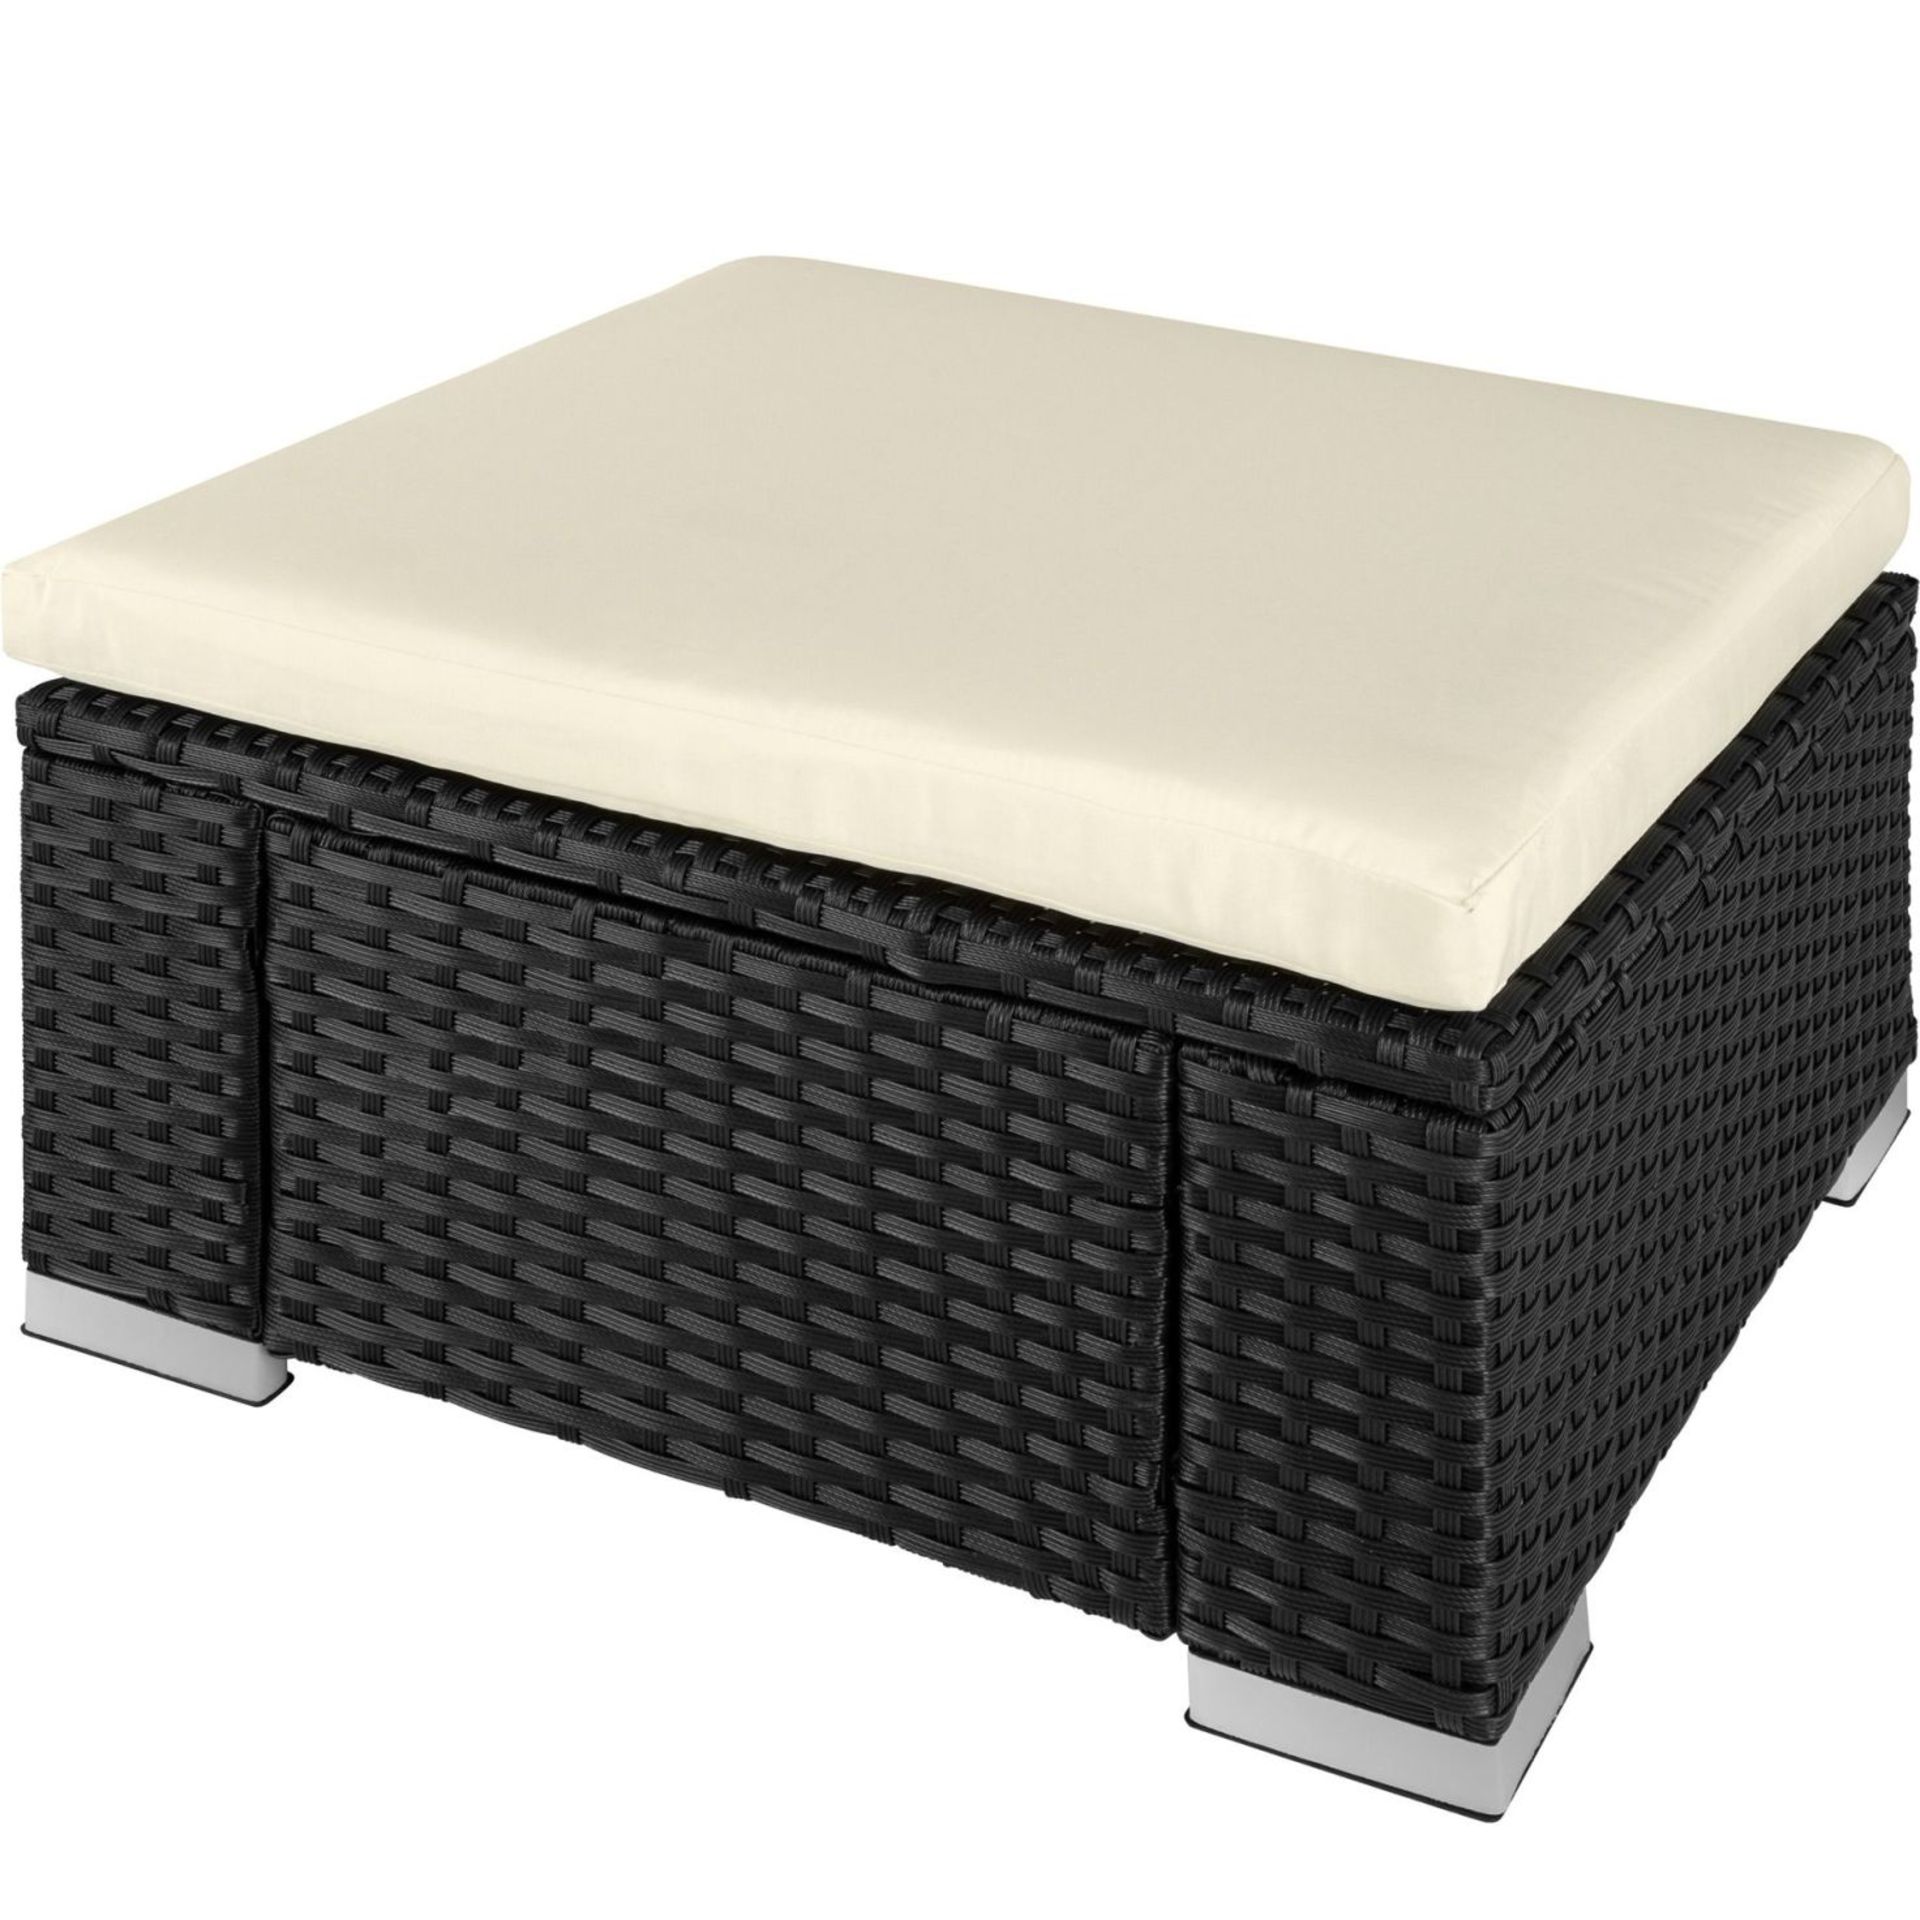 Tectake - Footstool Rattan Black - Boxed. RRP £57.99